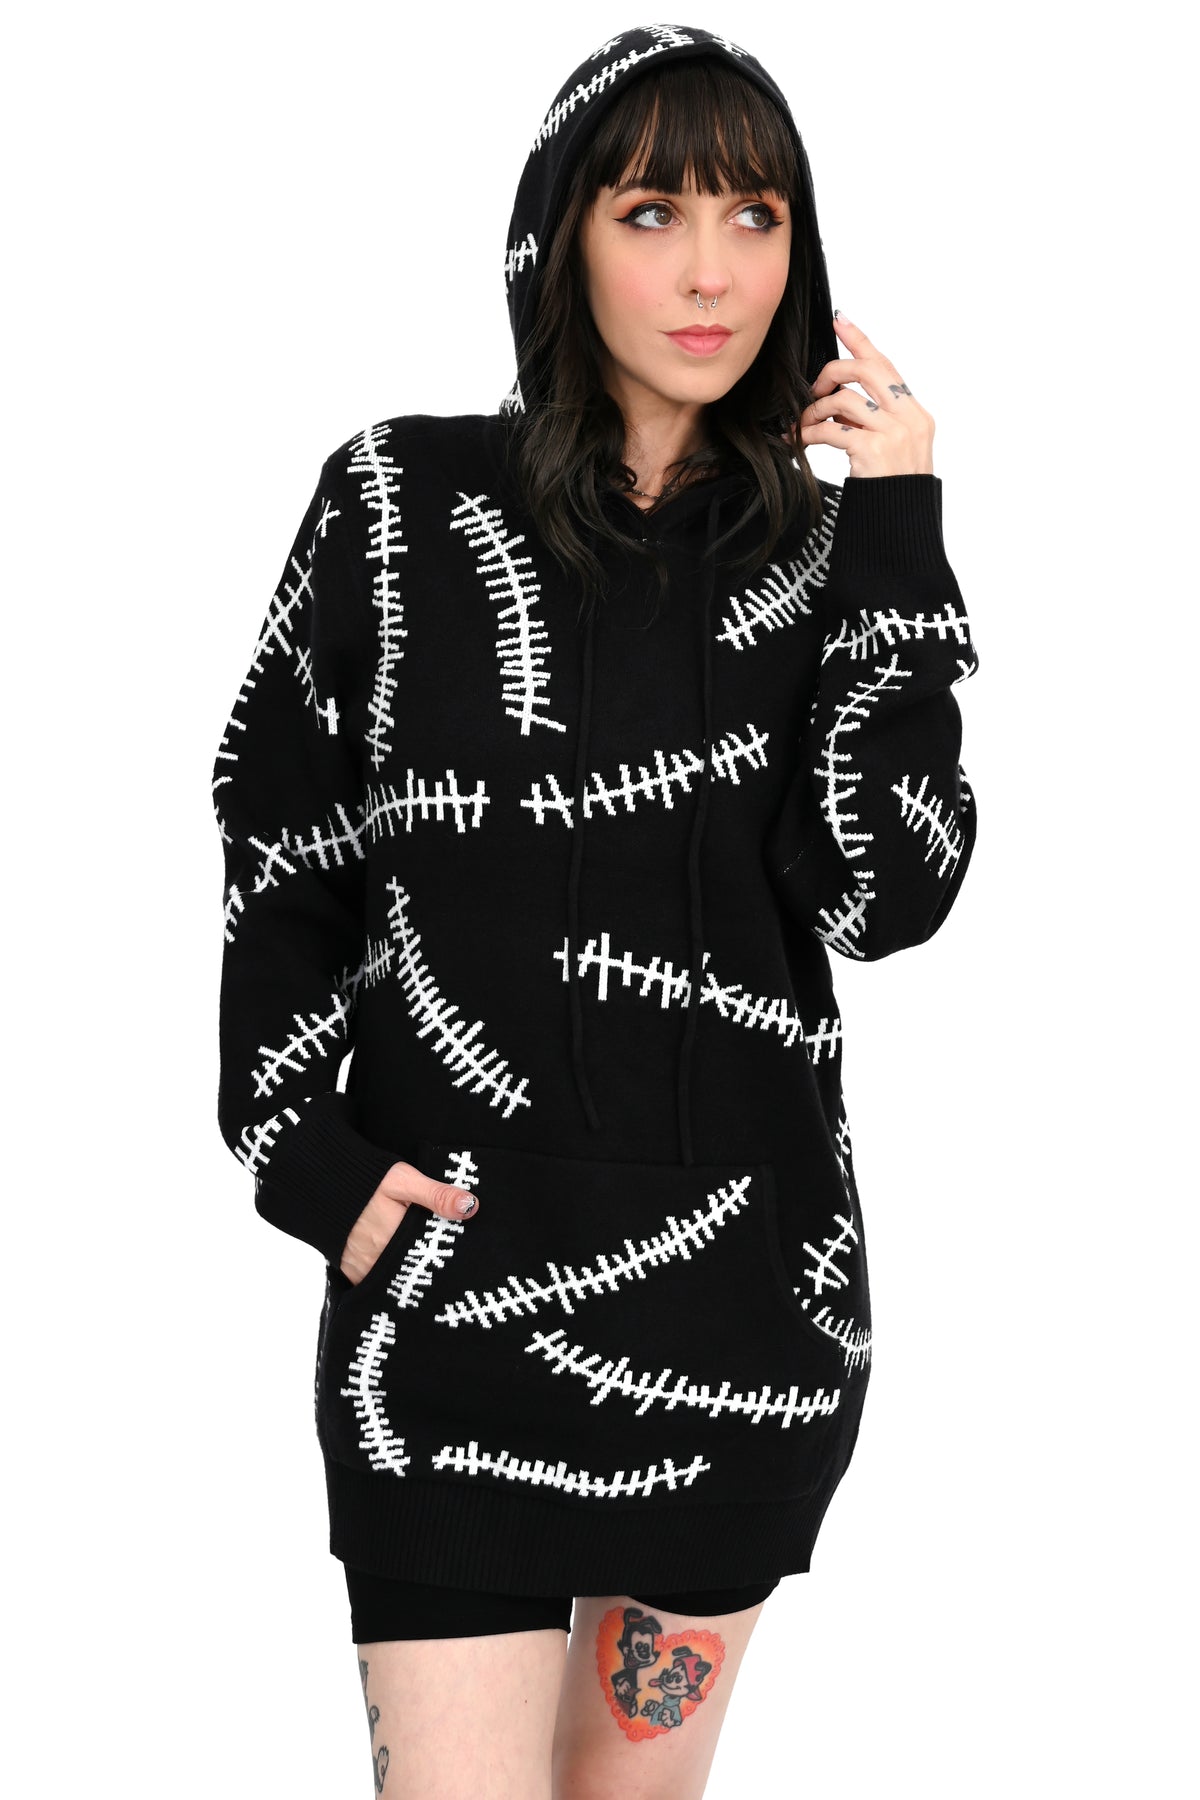 black hoodie with white glow in the dark stitch pattern